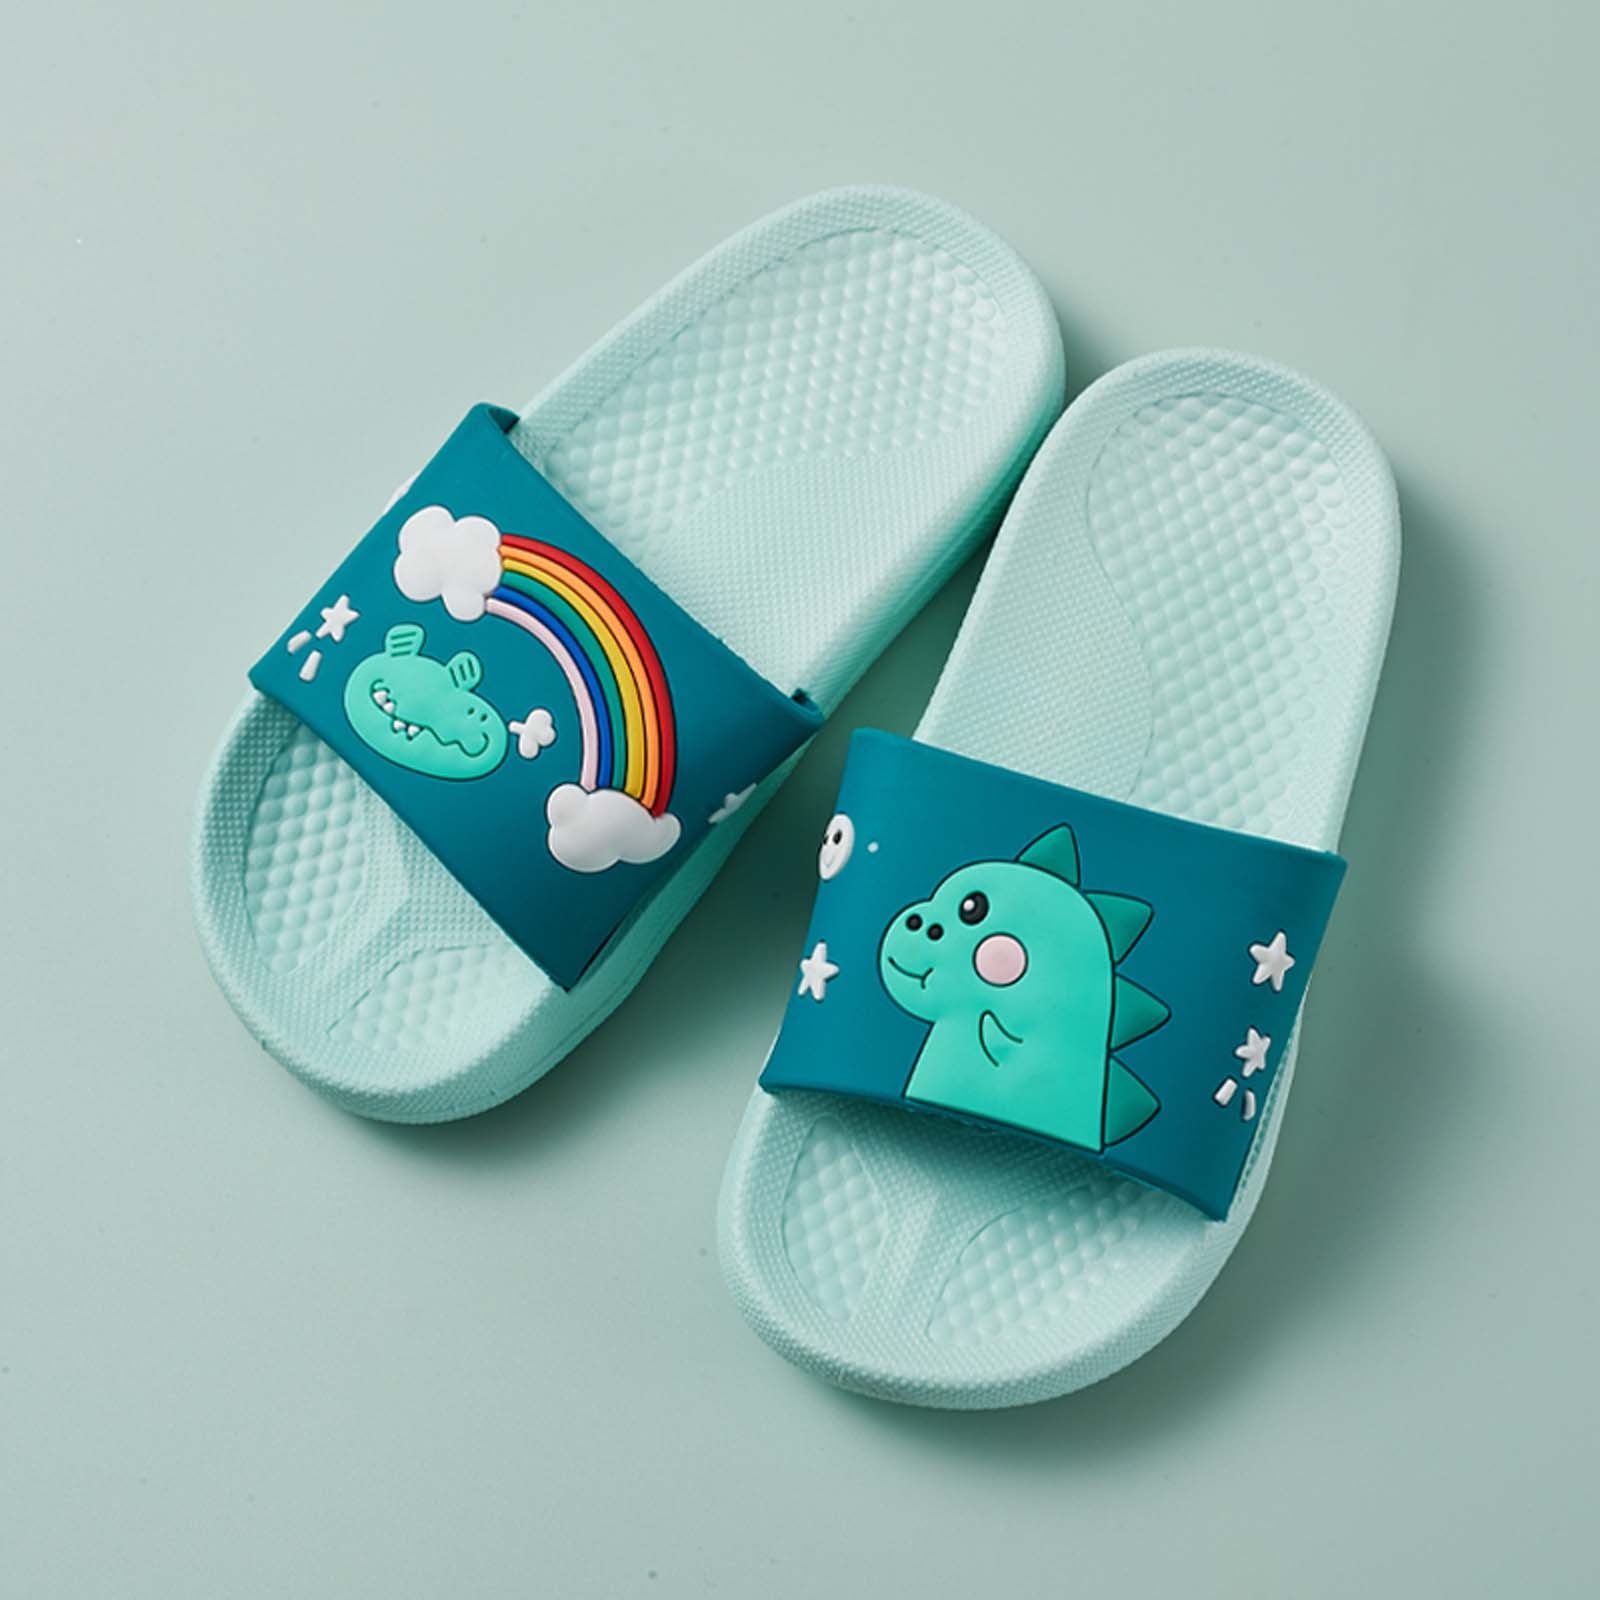 JHLIA Toddler Kids Slide Sandals for Boys Girls Lightweight Soft Dinosaur/Shark Cartoon Animals Summer Bathroom Shower Pool Beach Slippers Sliders Anti-Slip Flip Flops Unisex 